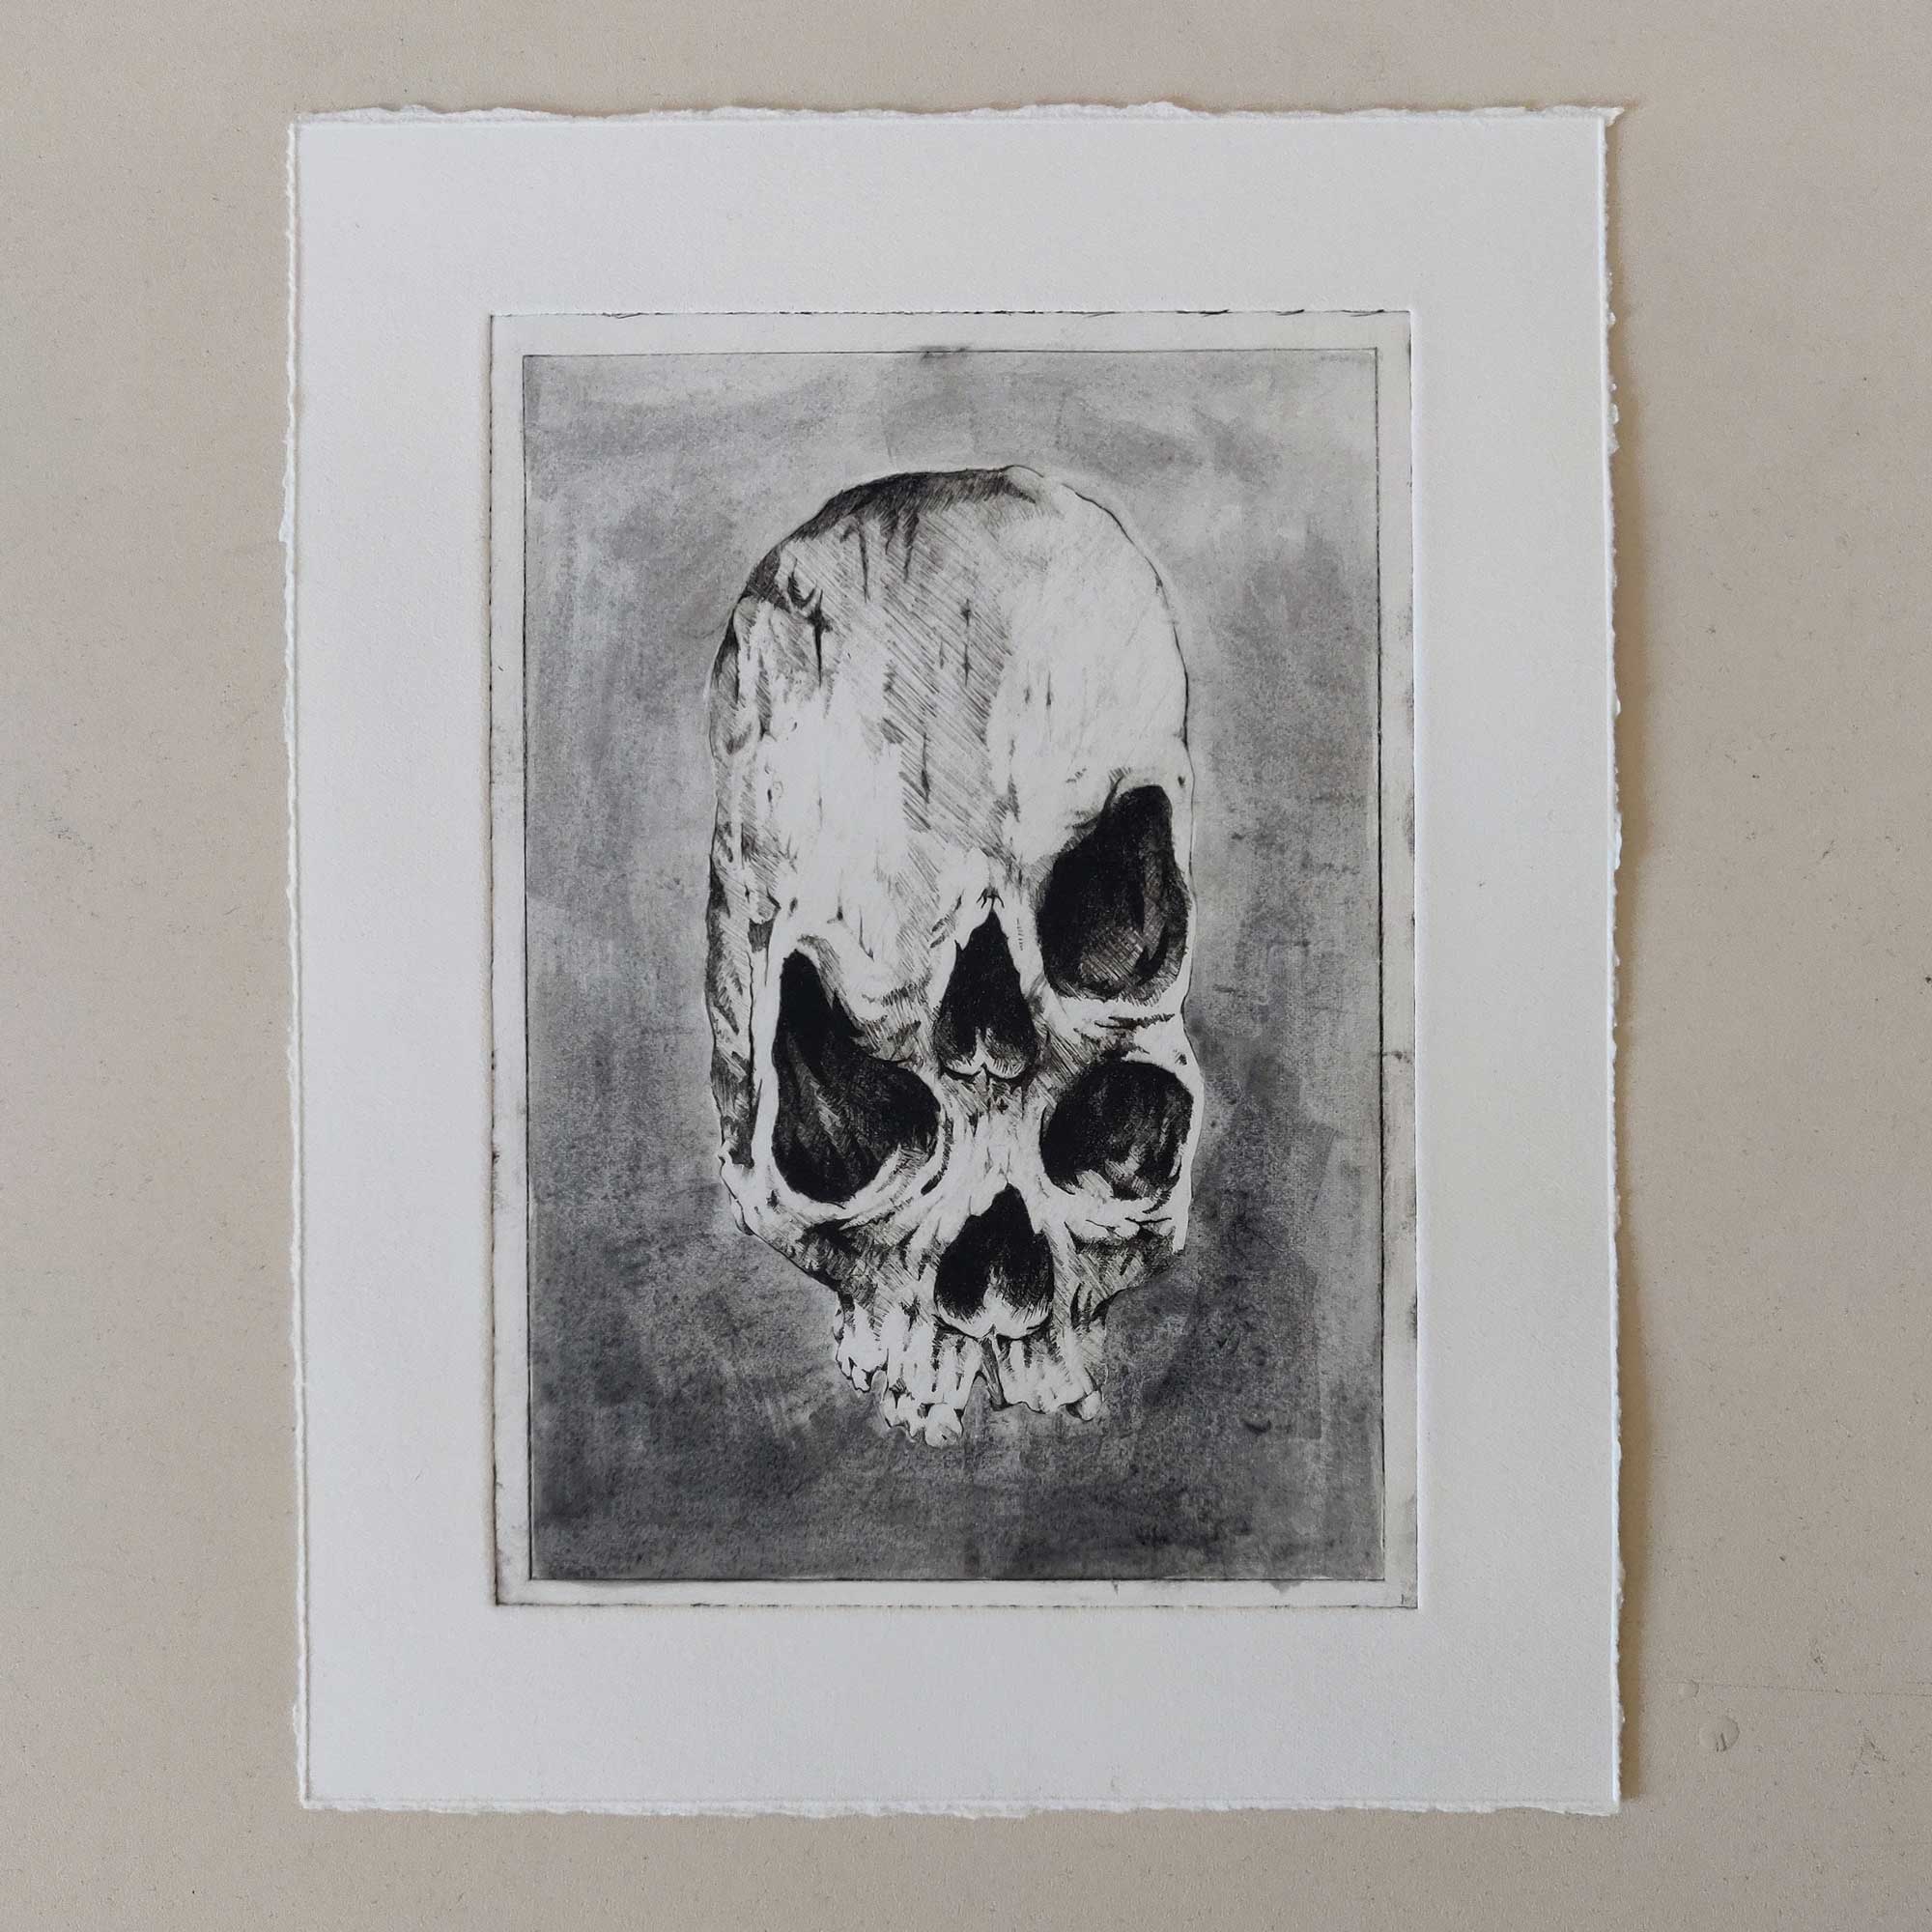 Fine Art work by Daniel Firmin showing an abstract human skull.